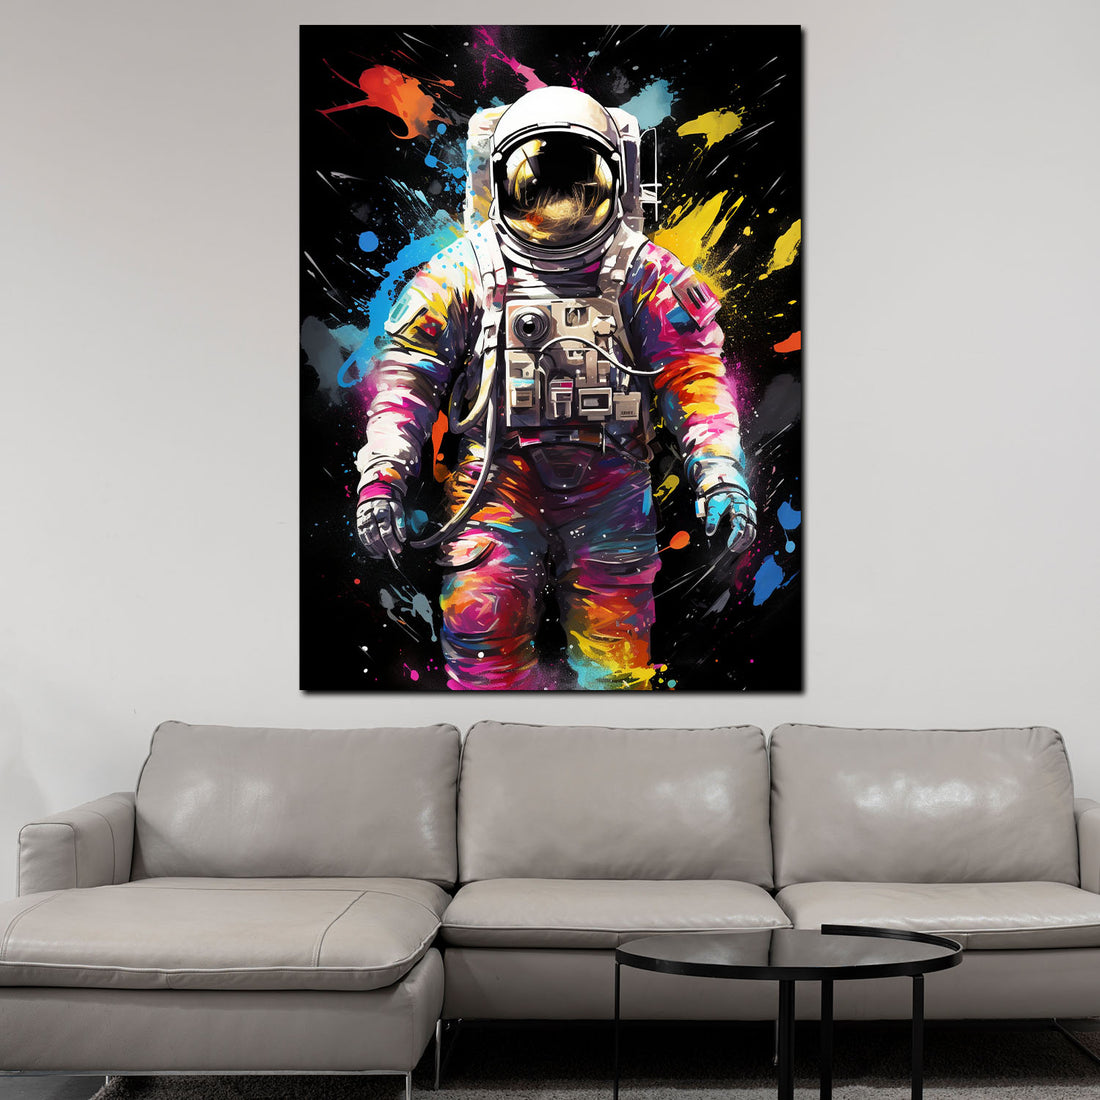 Wandbild Pop Art Astronaut Black Colour Style